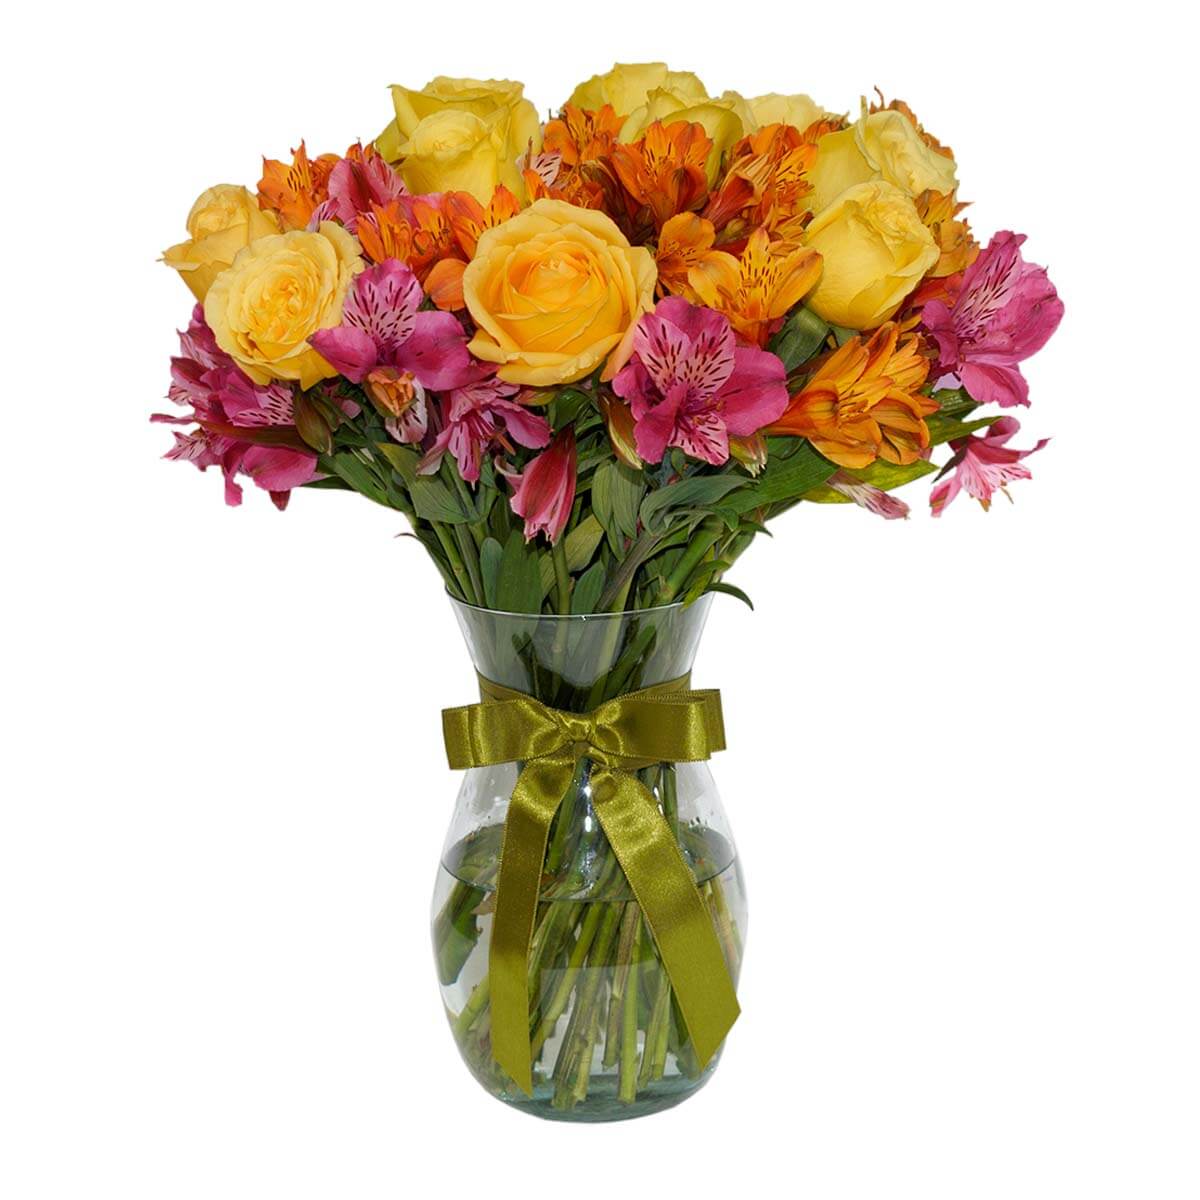 Florero de Rosas amarillas con astromelias - Detalles a distancia | Envía  flores